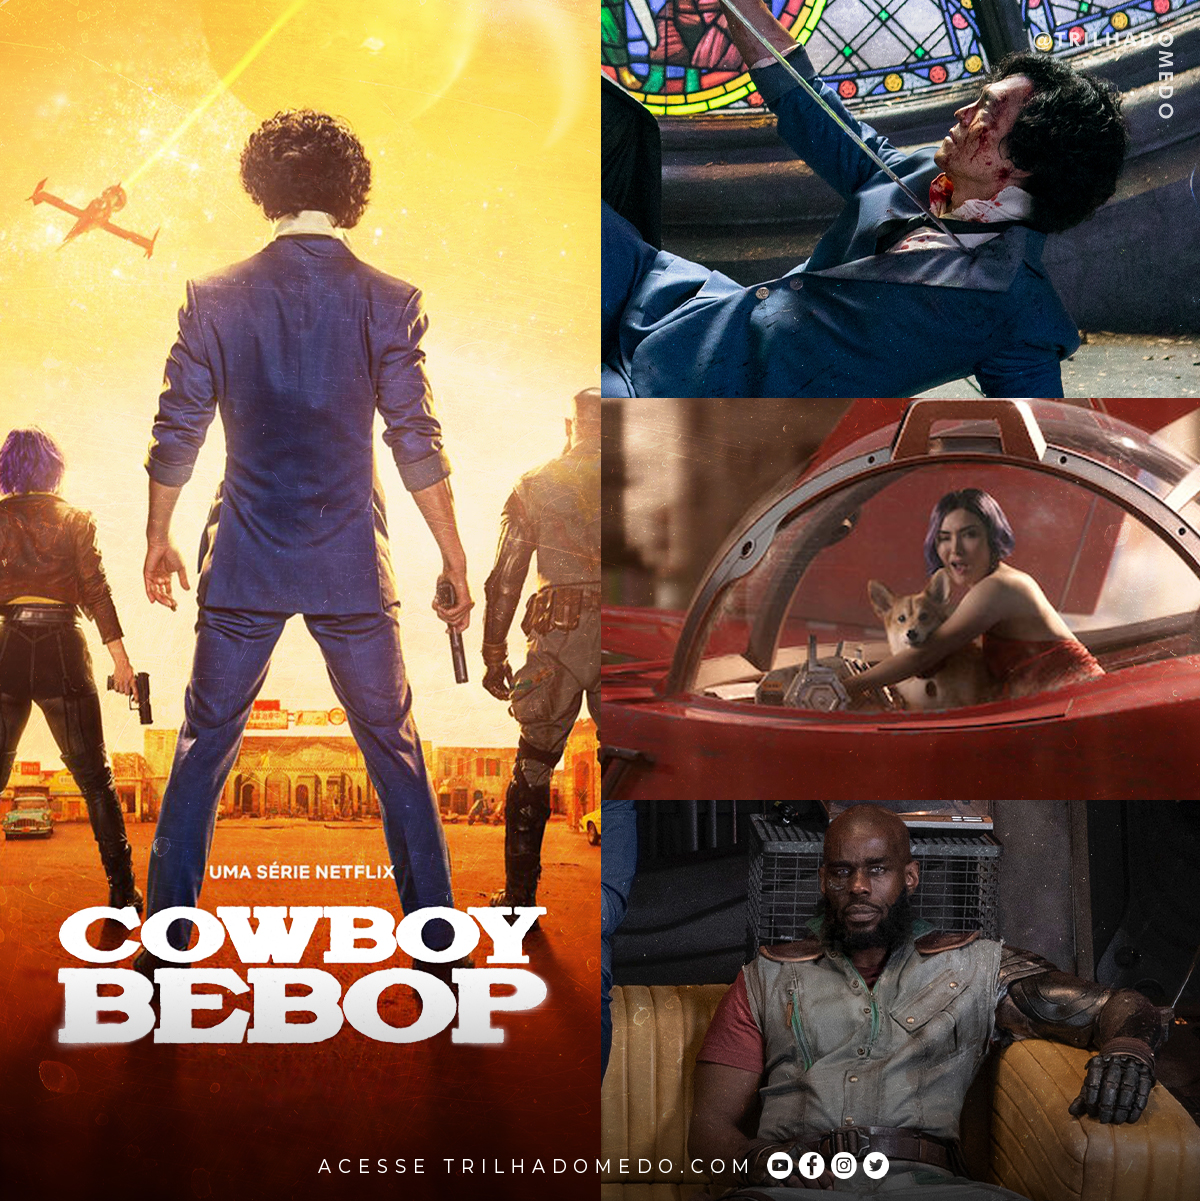 Série live-action “Cowboy Bebop” estreia na Netflix